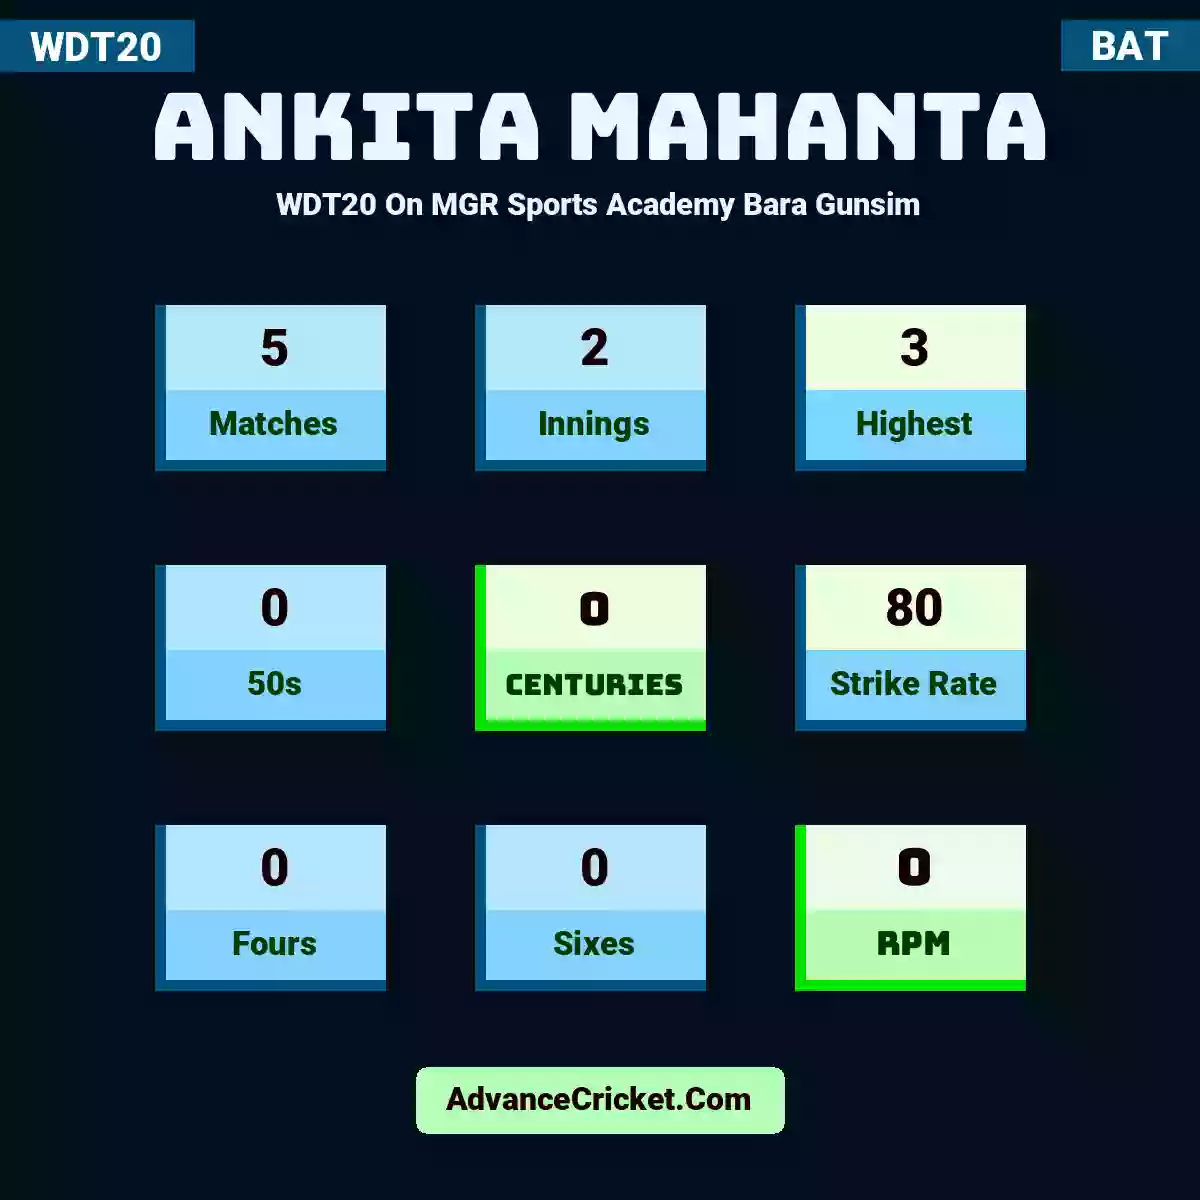 Ankita Mahanta WDT20  On MGR Sports Academy Bara Gunsim, Ankita Mahanta played 5 matches, scored 3 runs as highest, 0 half-centuries, and 0 centuries, with a strike rate of 80. A.Mahanta hit 0 fours and 0 sixes, with an RPM of 0.